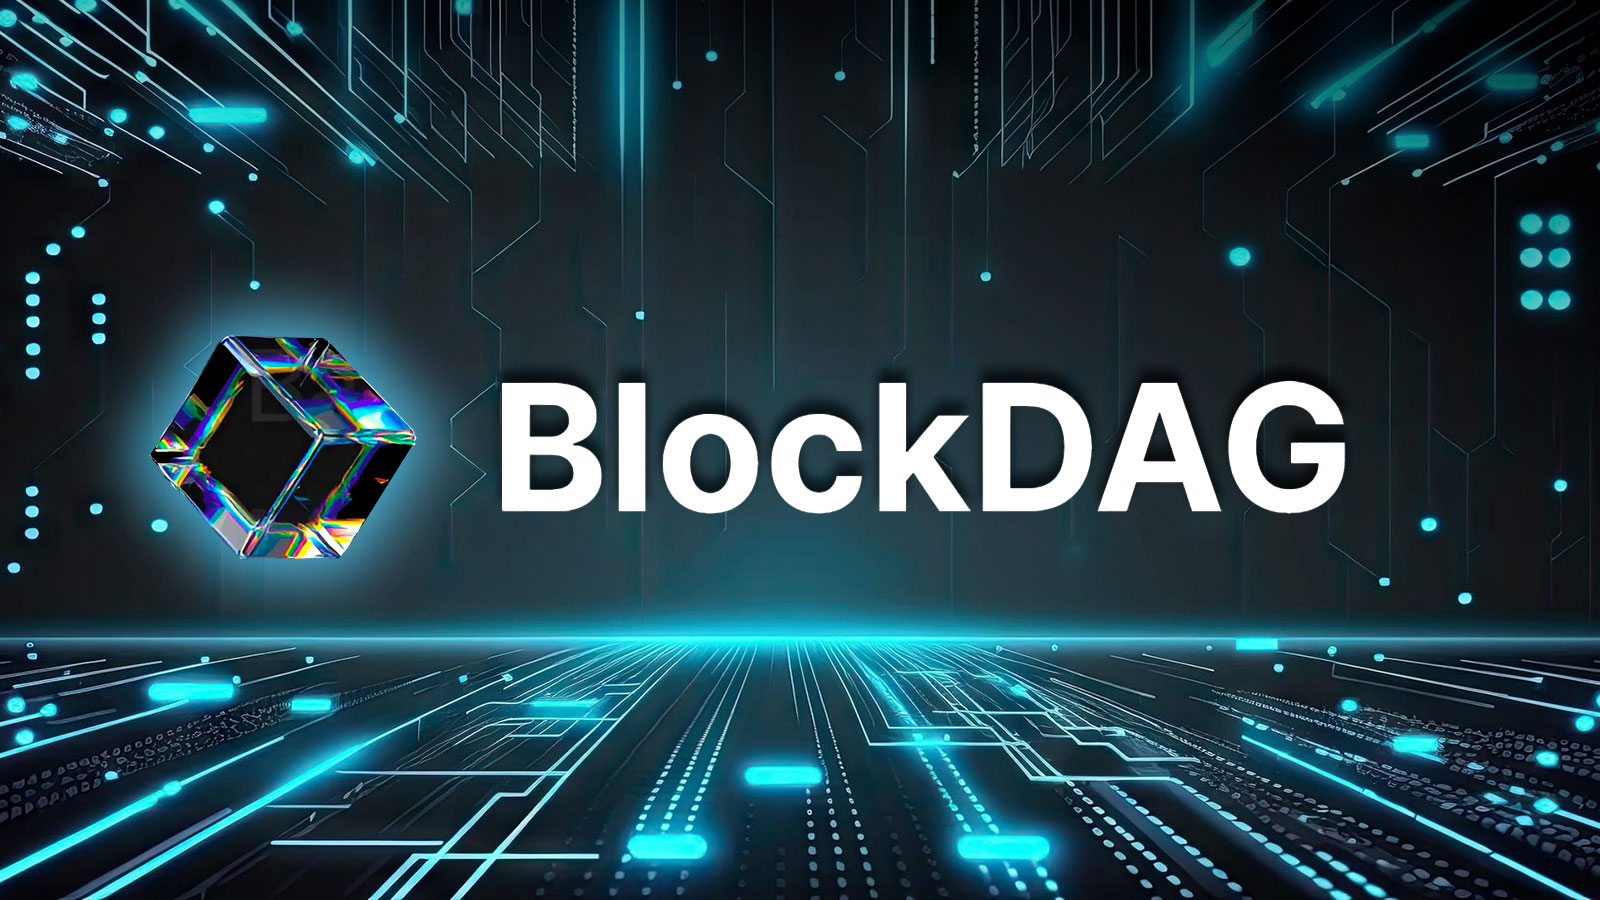 BlockDAG Launches Technical DAGpaper, Stellar (XLM) & Bitcoin Cash (BCH) Price Movements